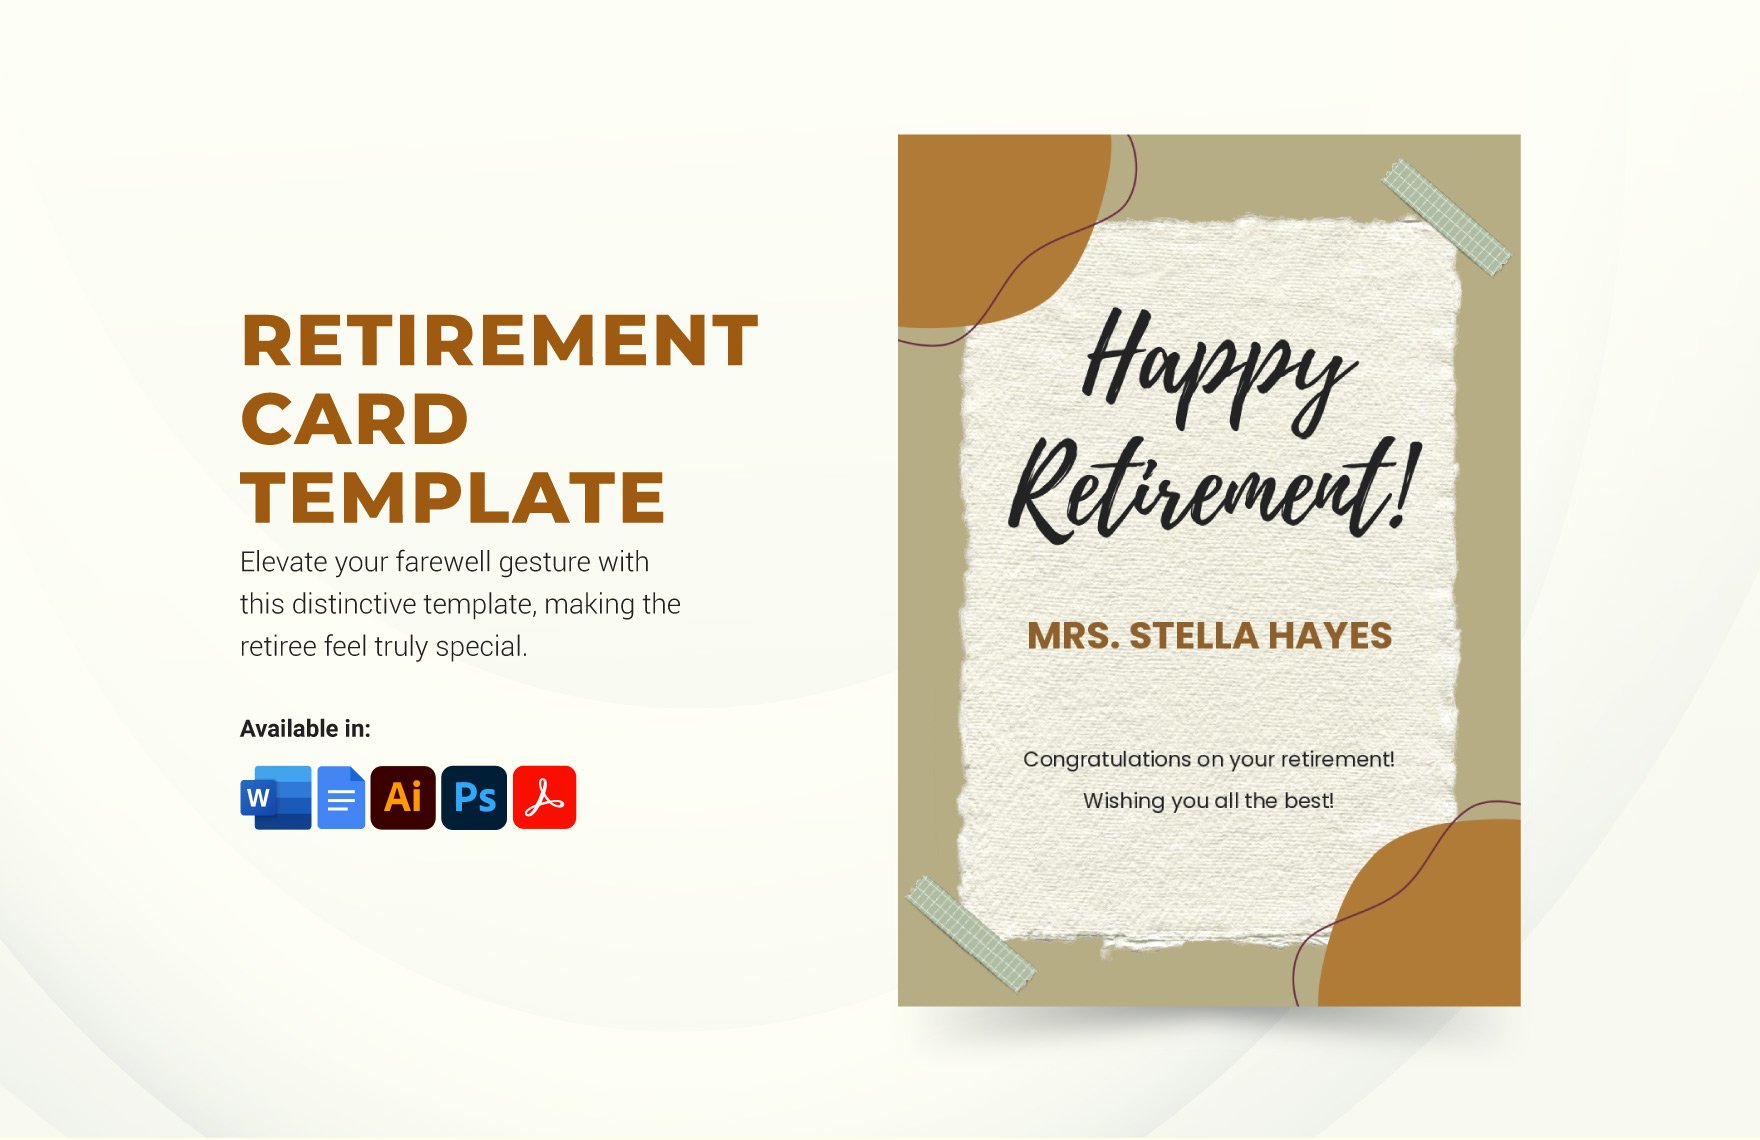 Free Retirement Card Template in Word, Google Docs, PDF, Illustrator, PSD